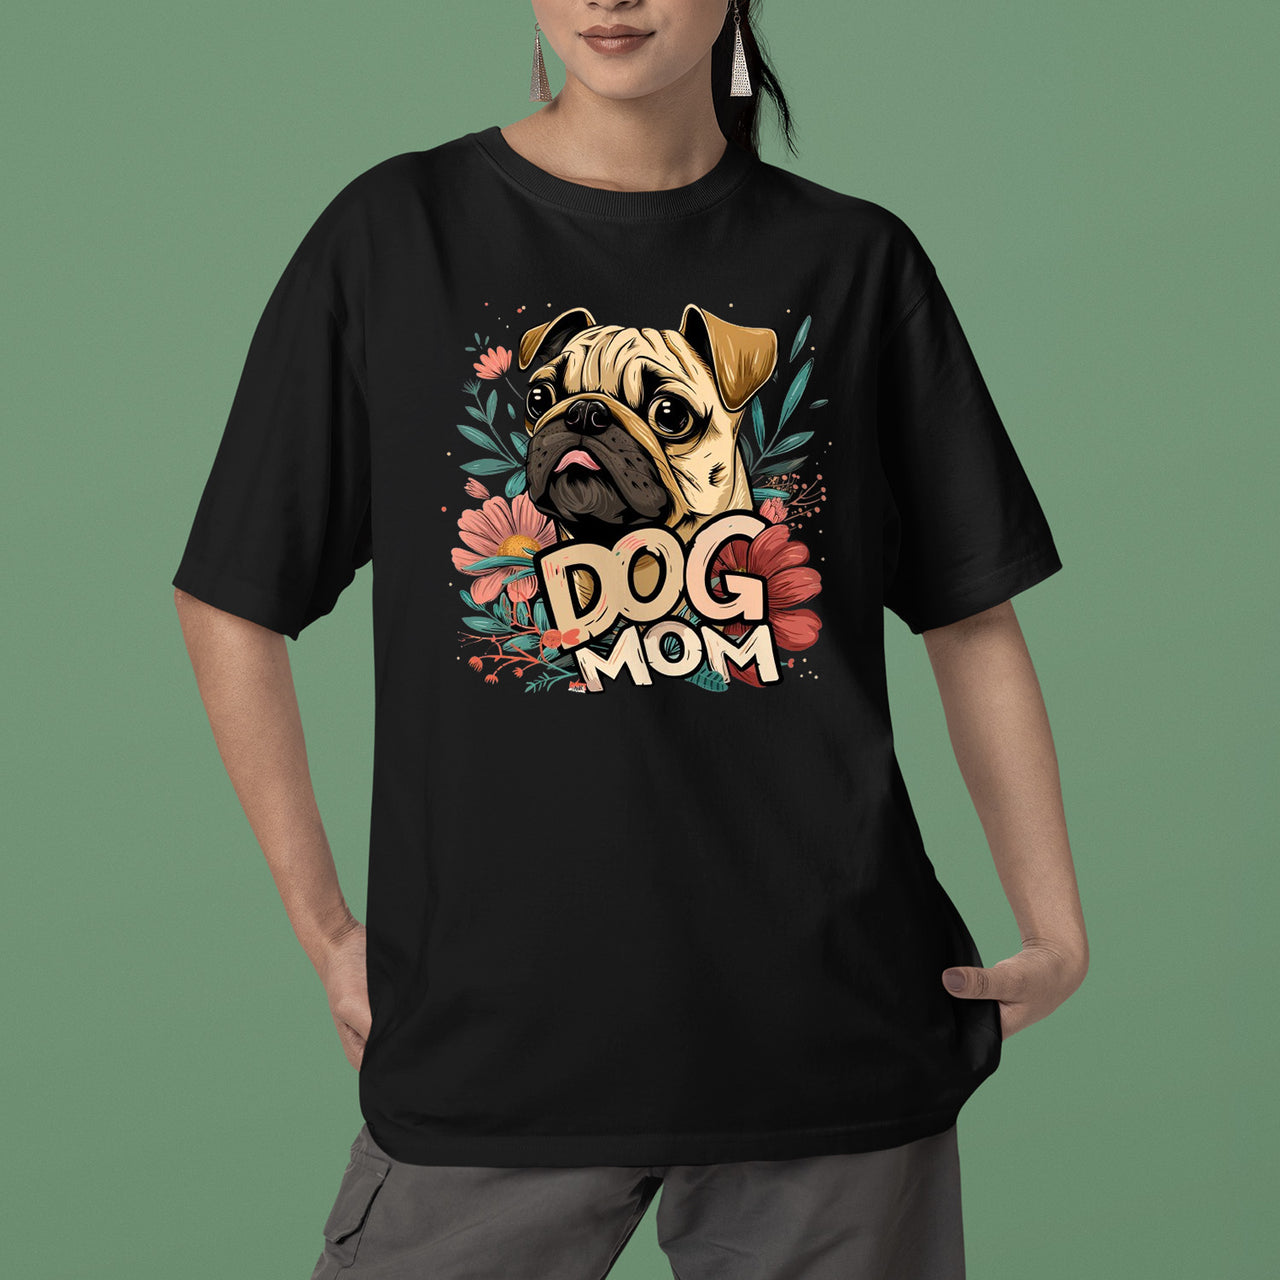 Pug Dog T-shirt, Pet Lover Shirt, Dog Lover Shirt, Dog Mom T-Shirt, Dog Owner Shirt, Gift For Dog Mom, Funny Dog Shirts, Women Dog T-Shirt, Mother's Day Gift, Dog Lover Wife Gifts, Dog Shirt